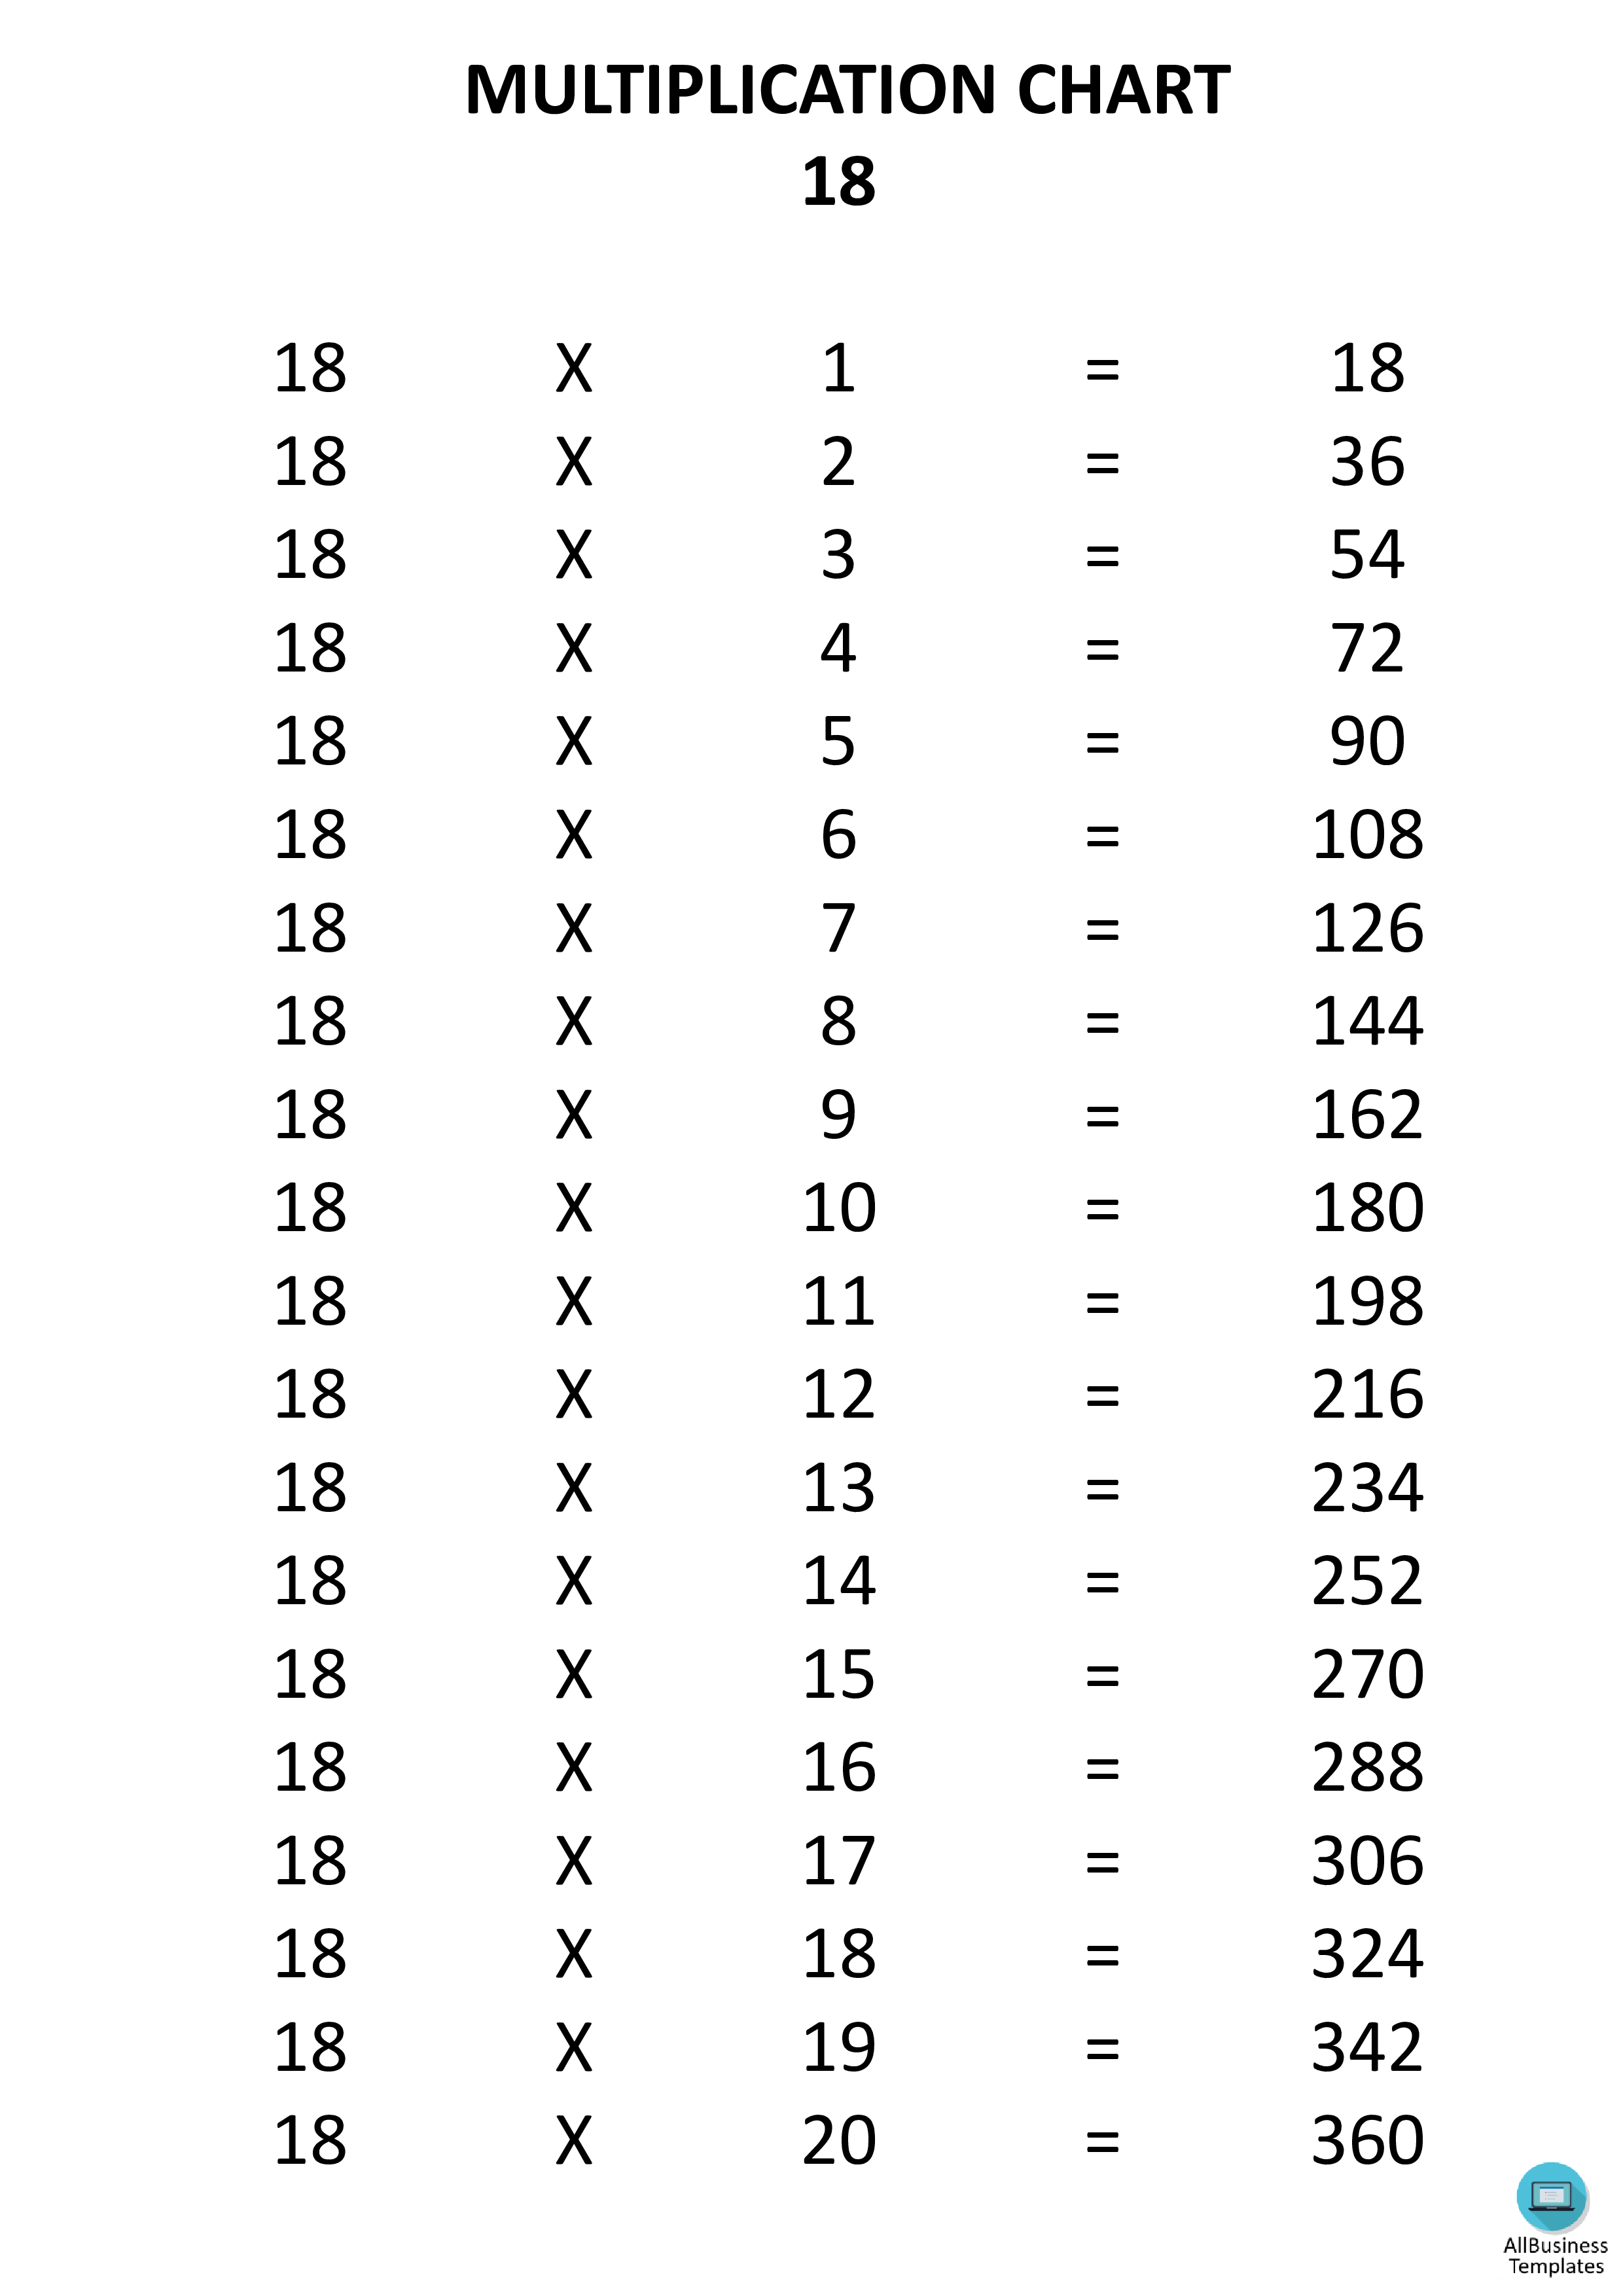 Multiplication Chart x18 main image